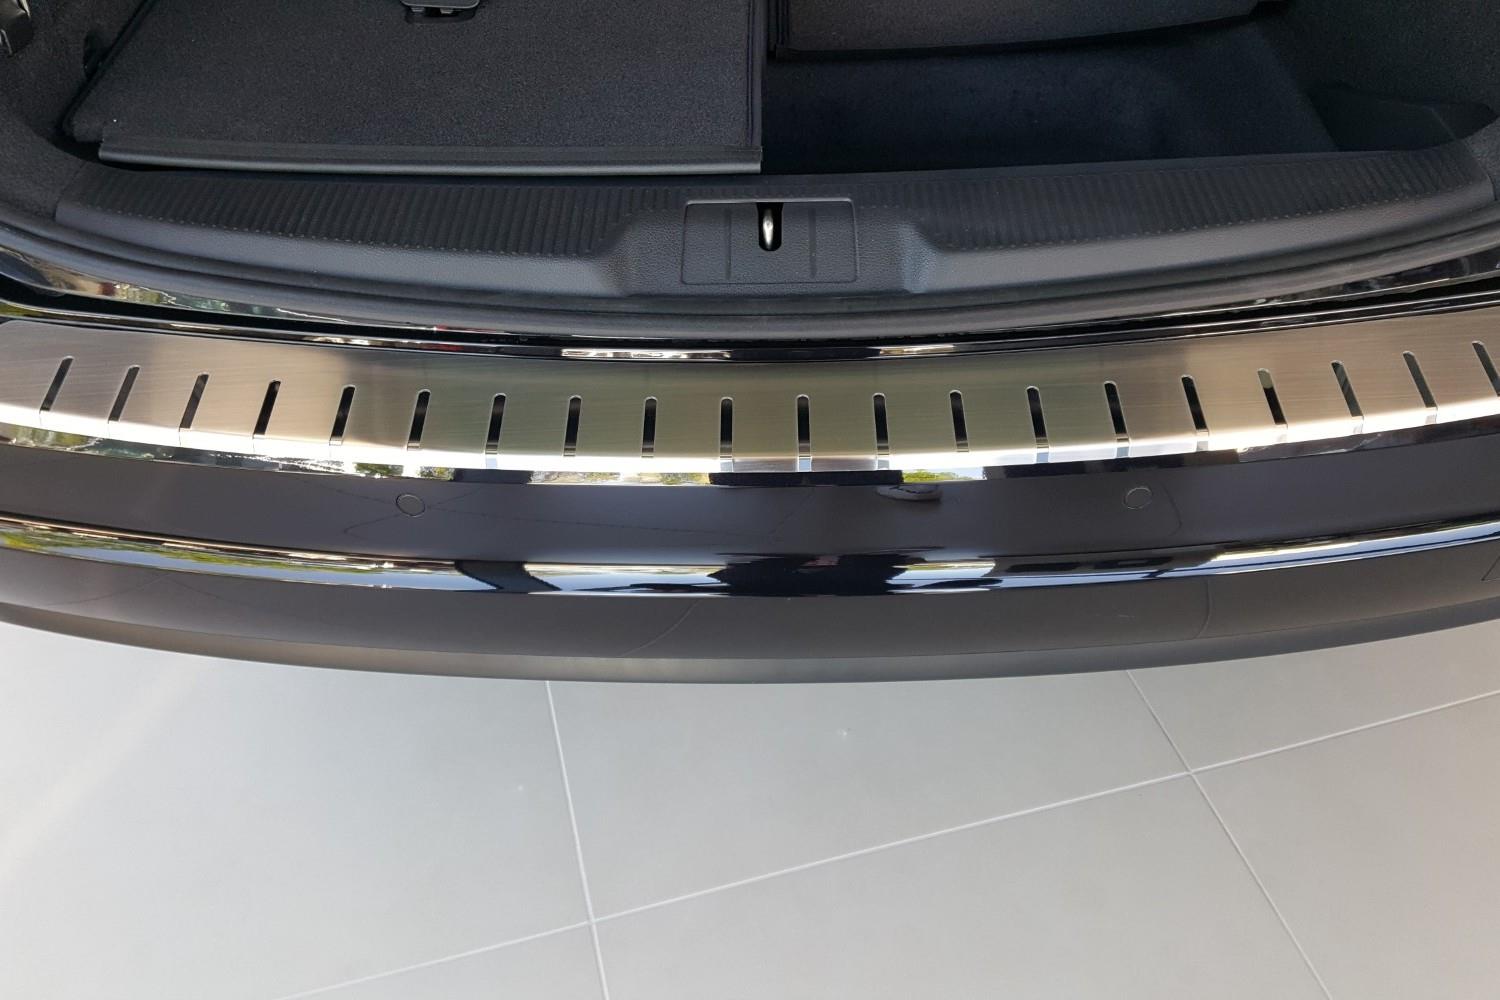 Protection de seuil de coffre Volkswagen Sharan II (7N) acier inox